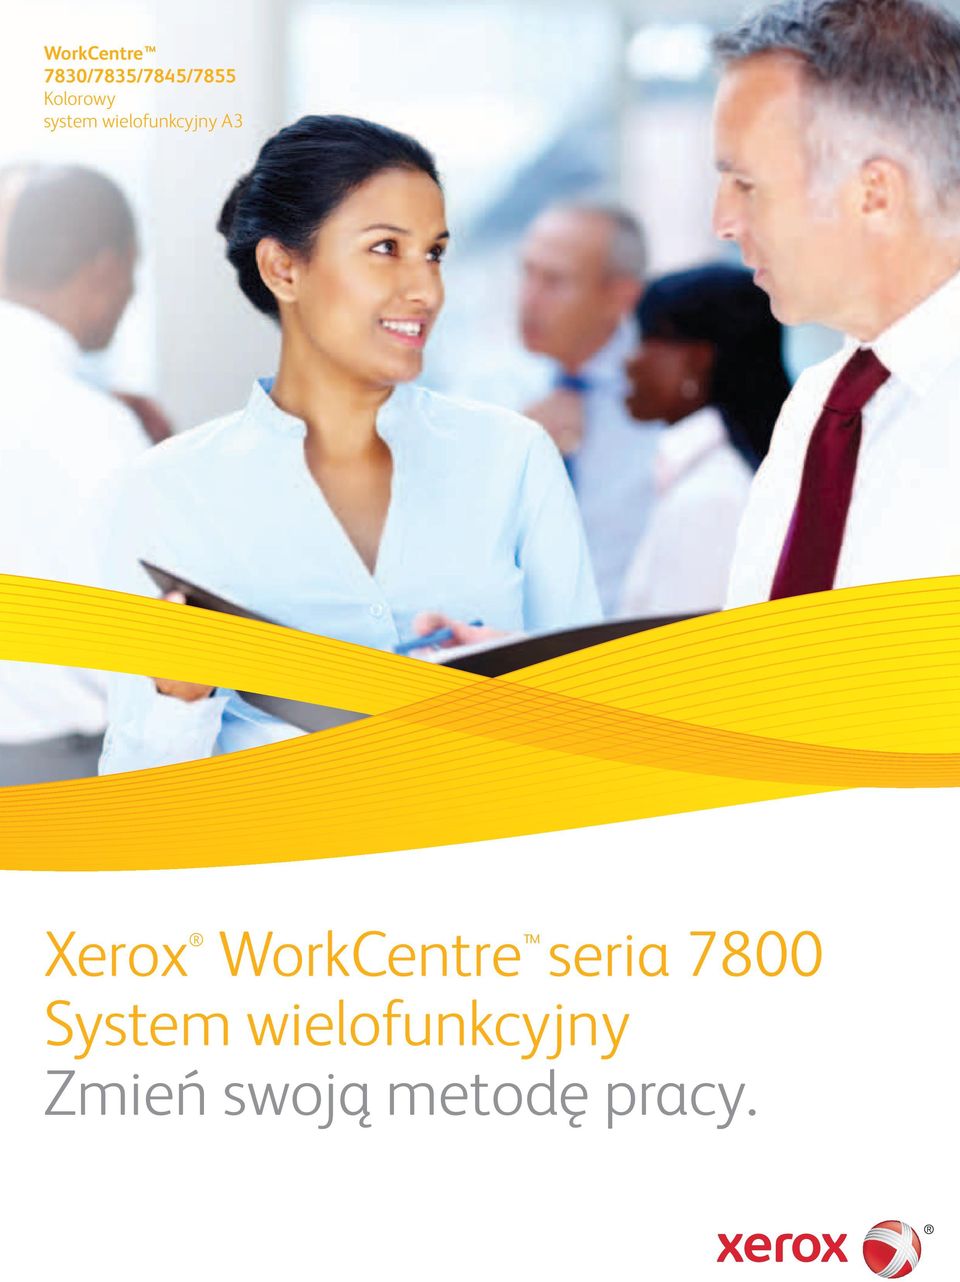 Xerox WorkCentre seria 7800 System